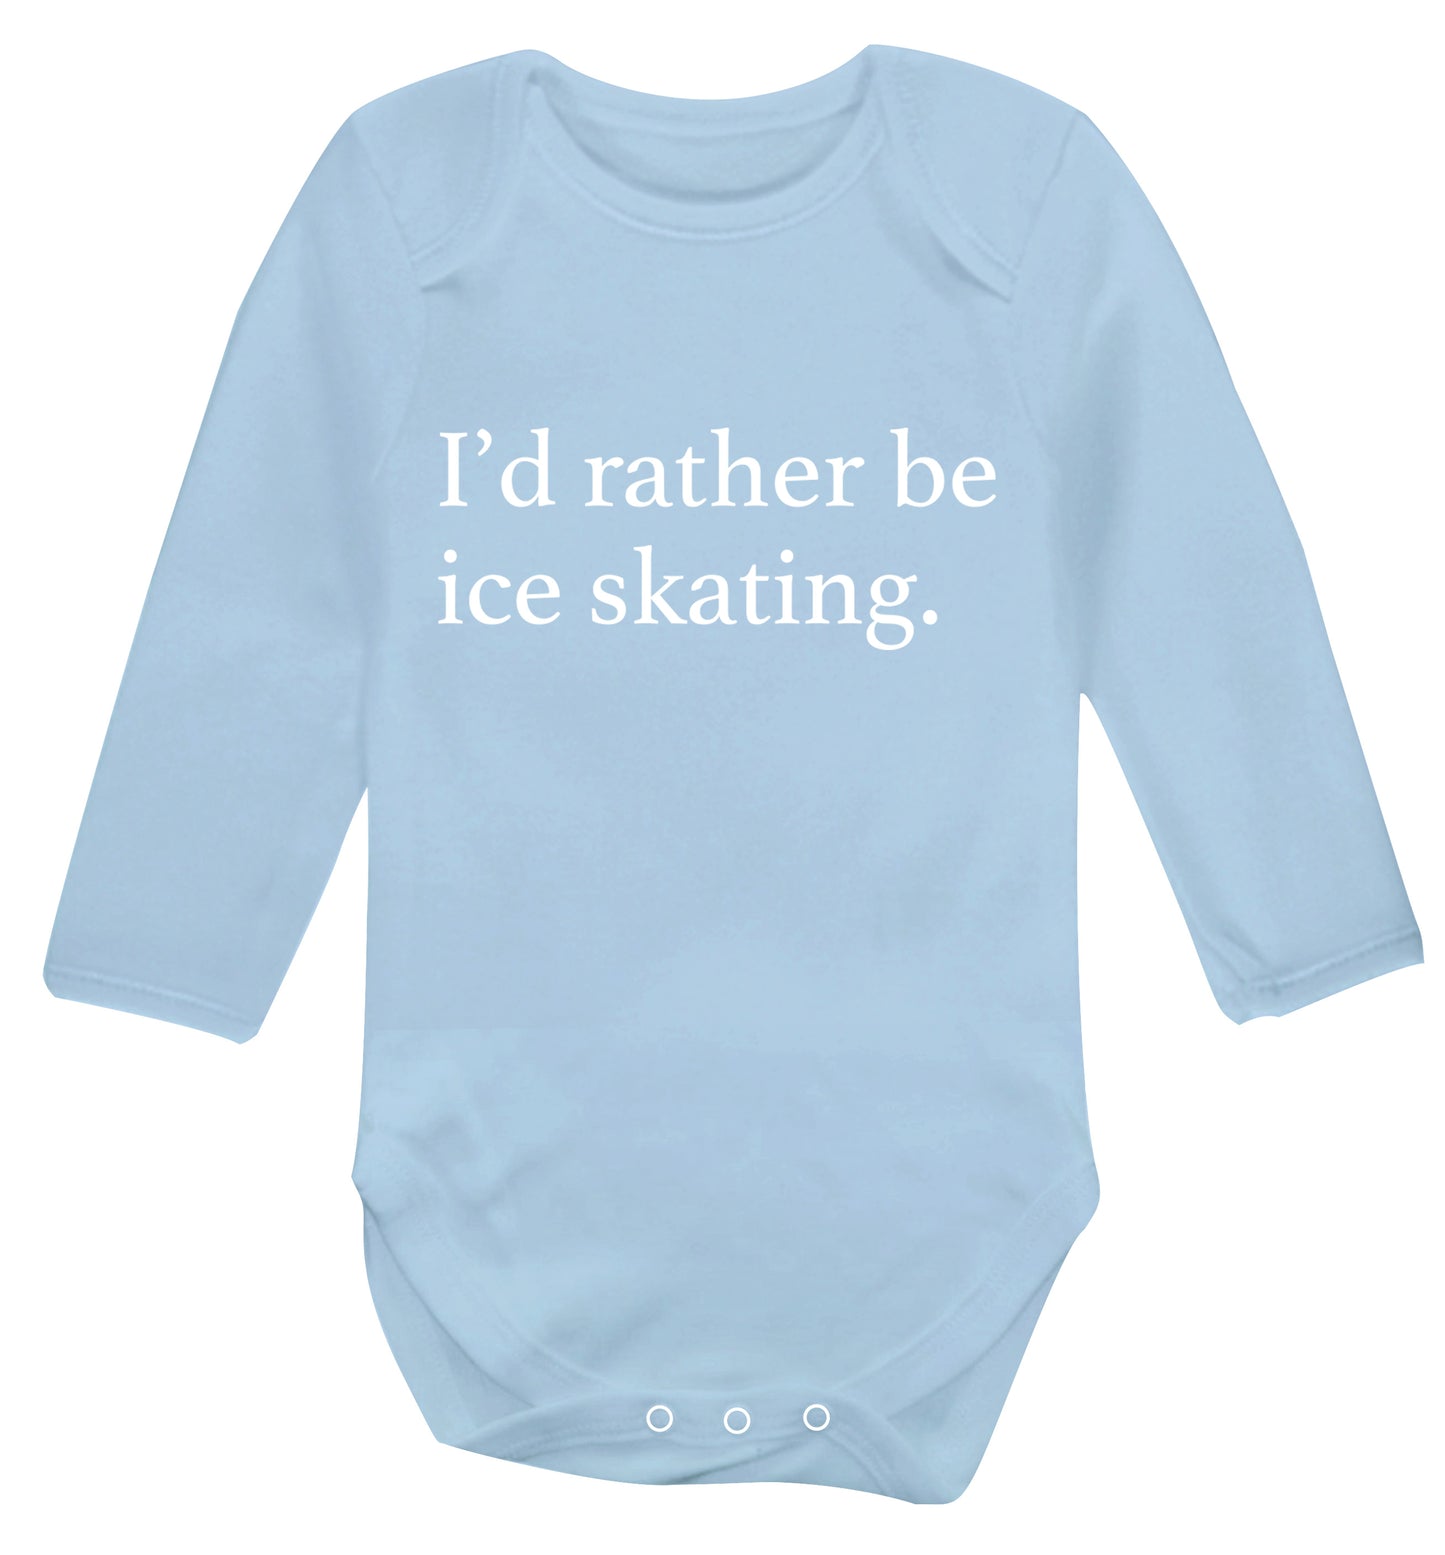 I'd rather be ice skating Baby Vest long sleeved pale blue 6-12 months